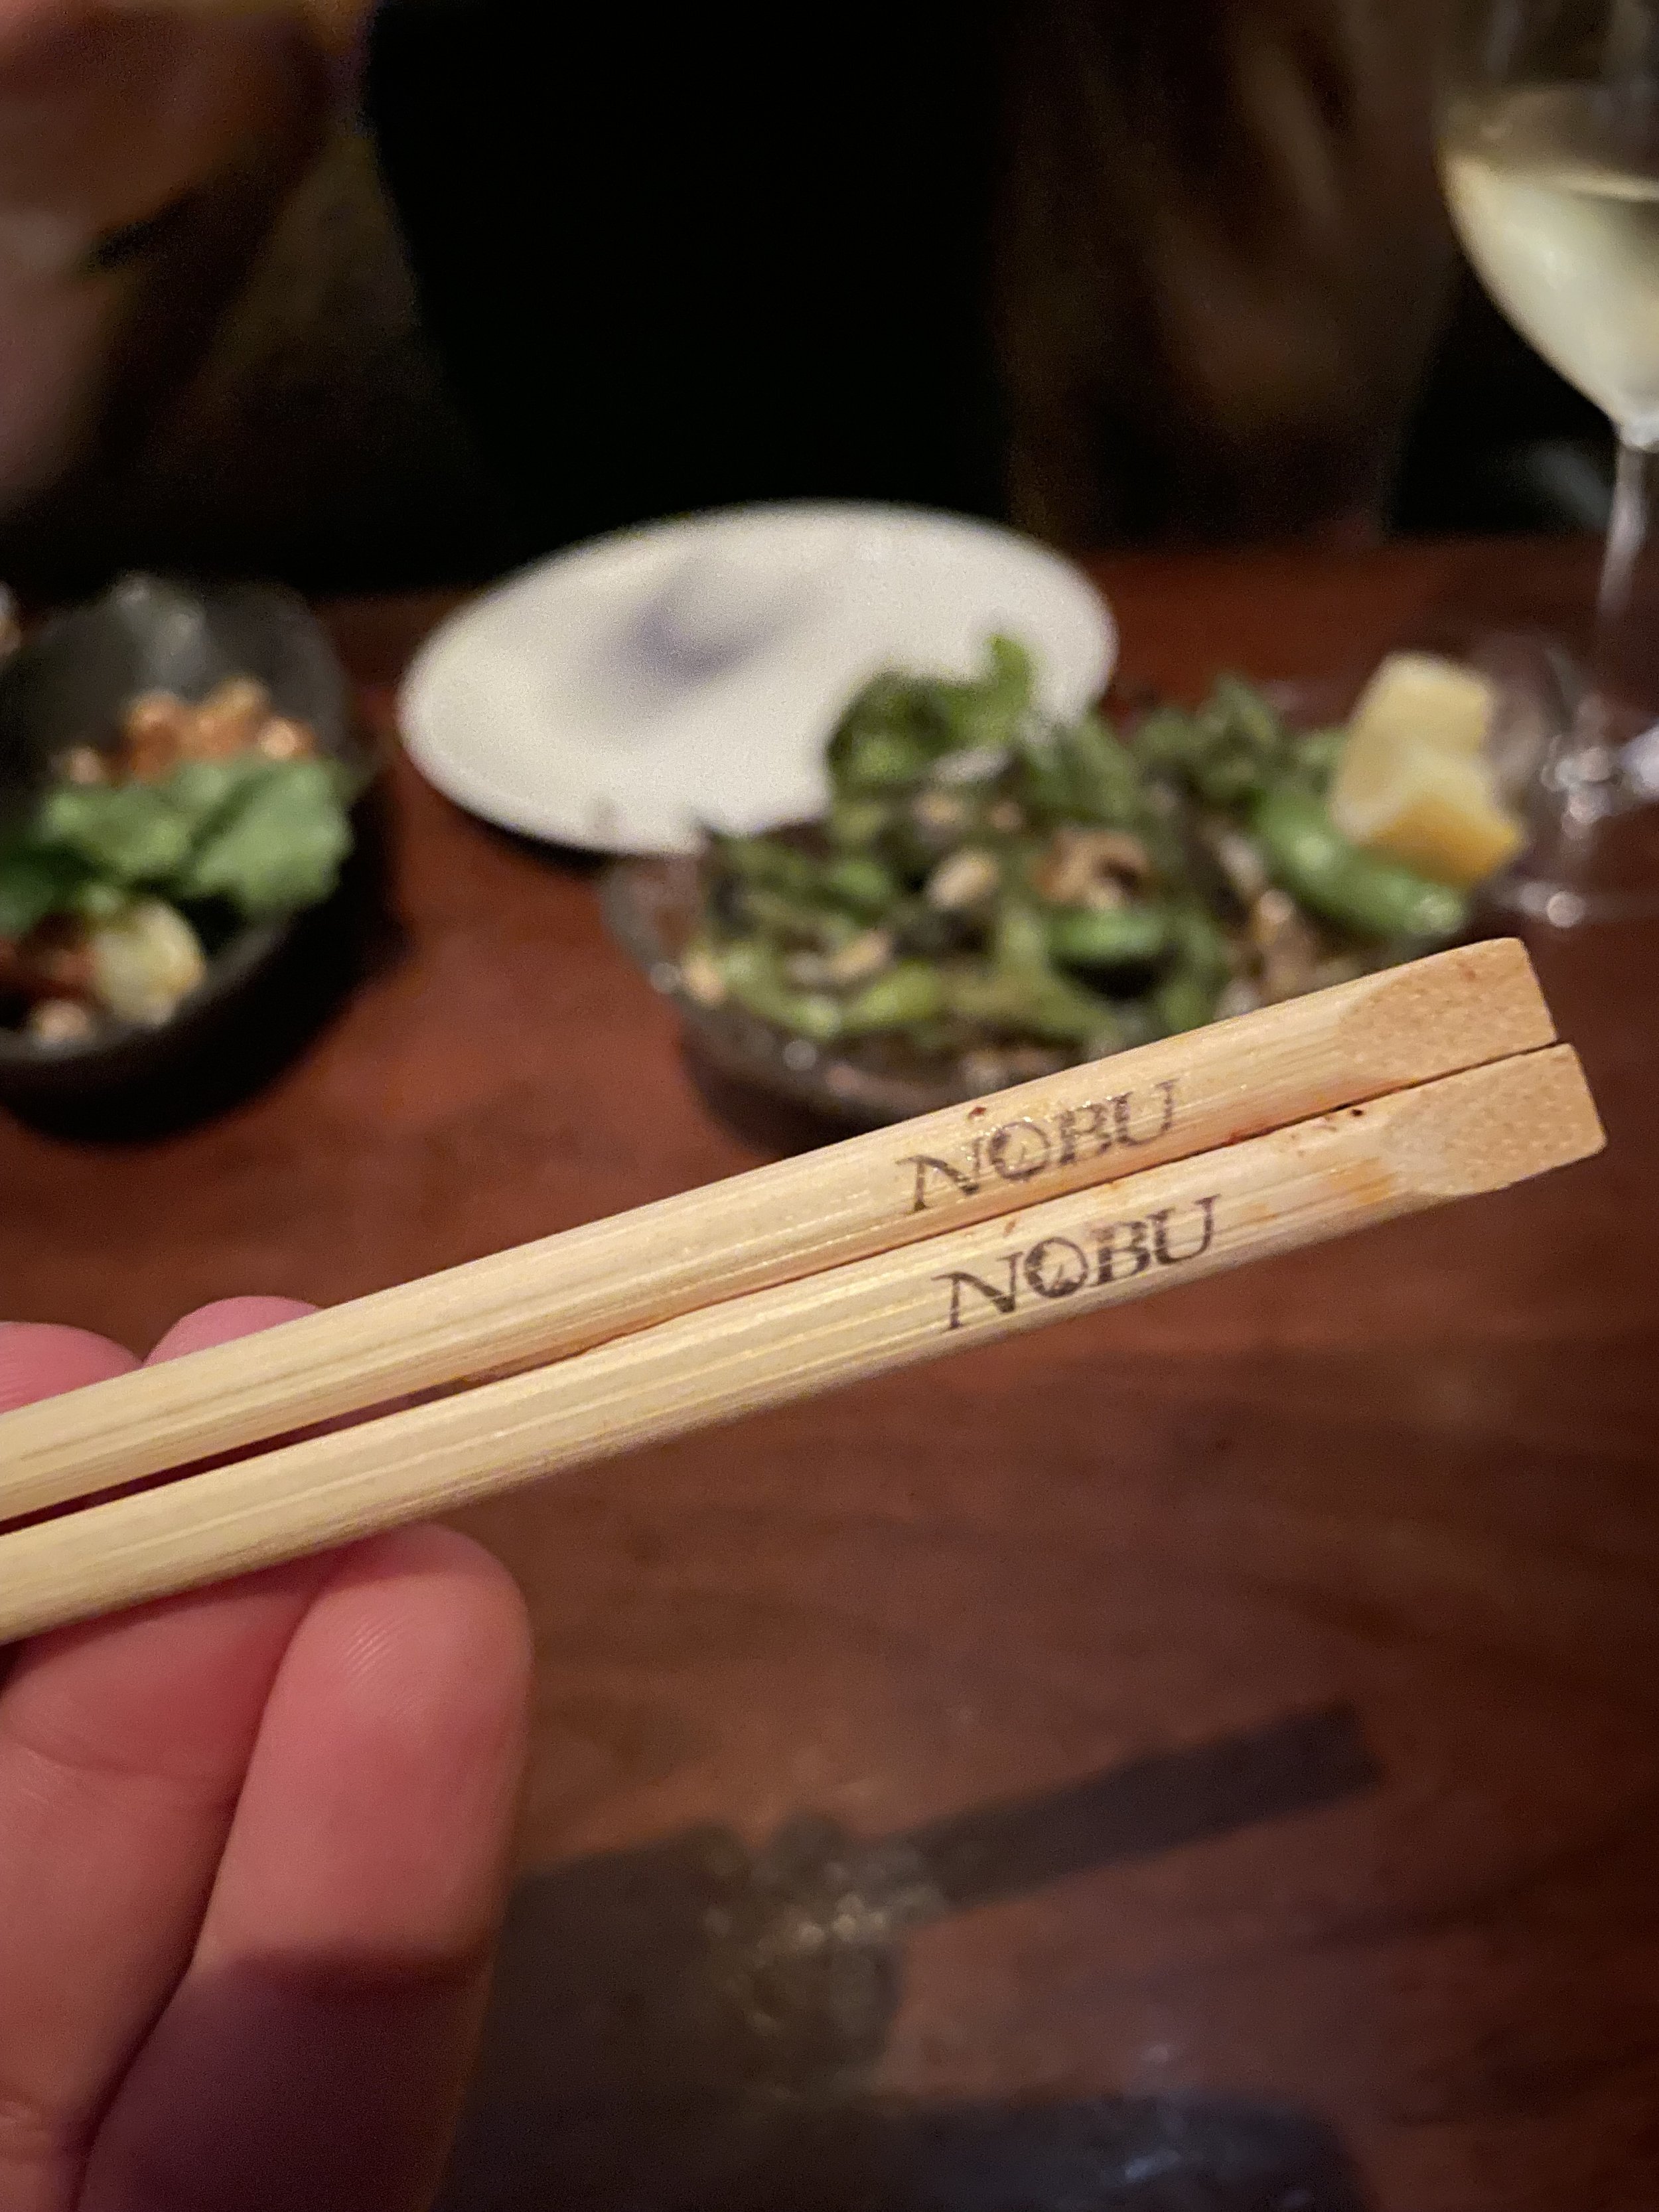 Nobu chopsticks